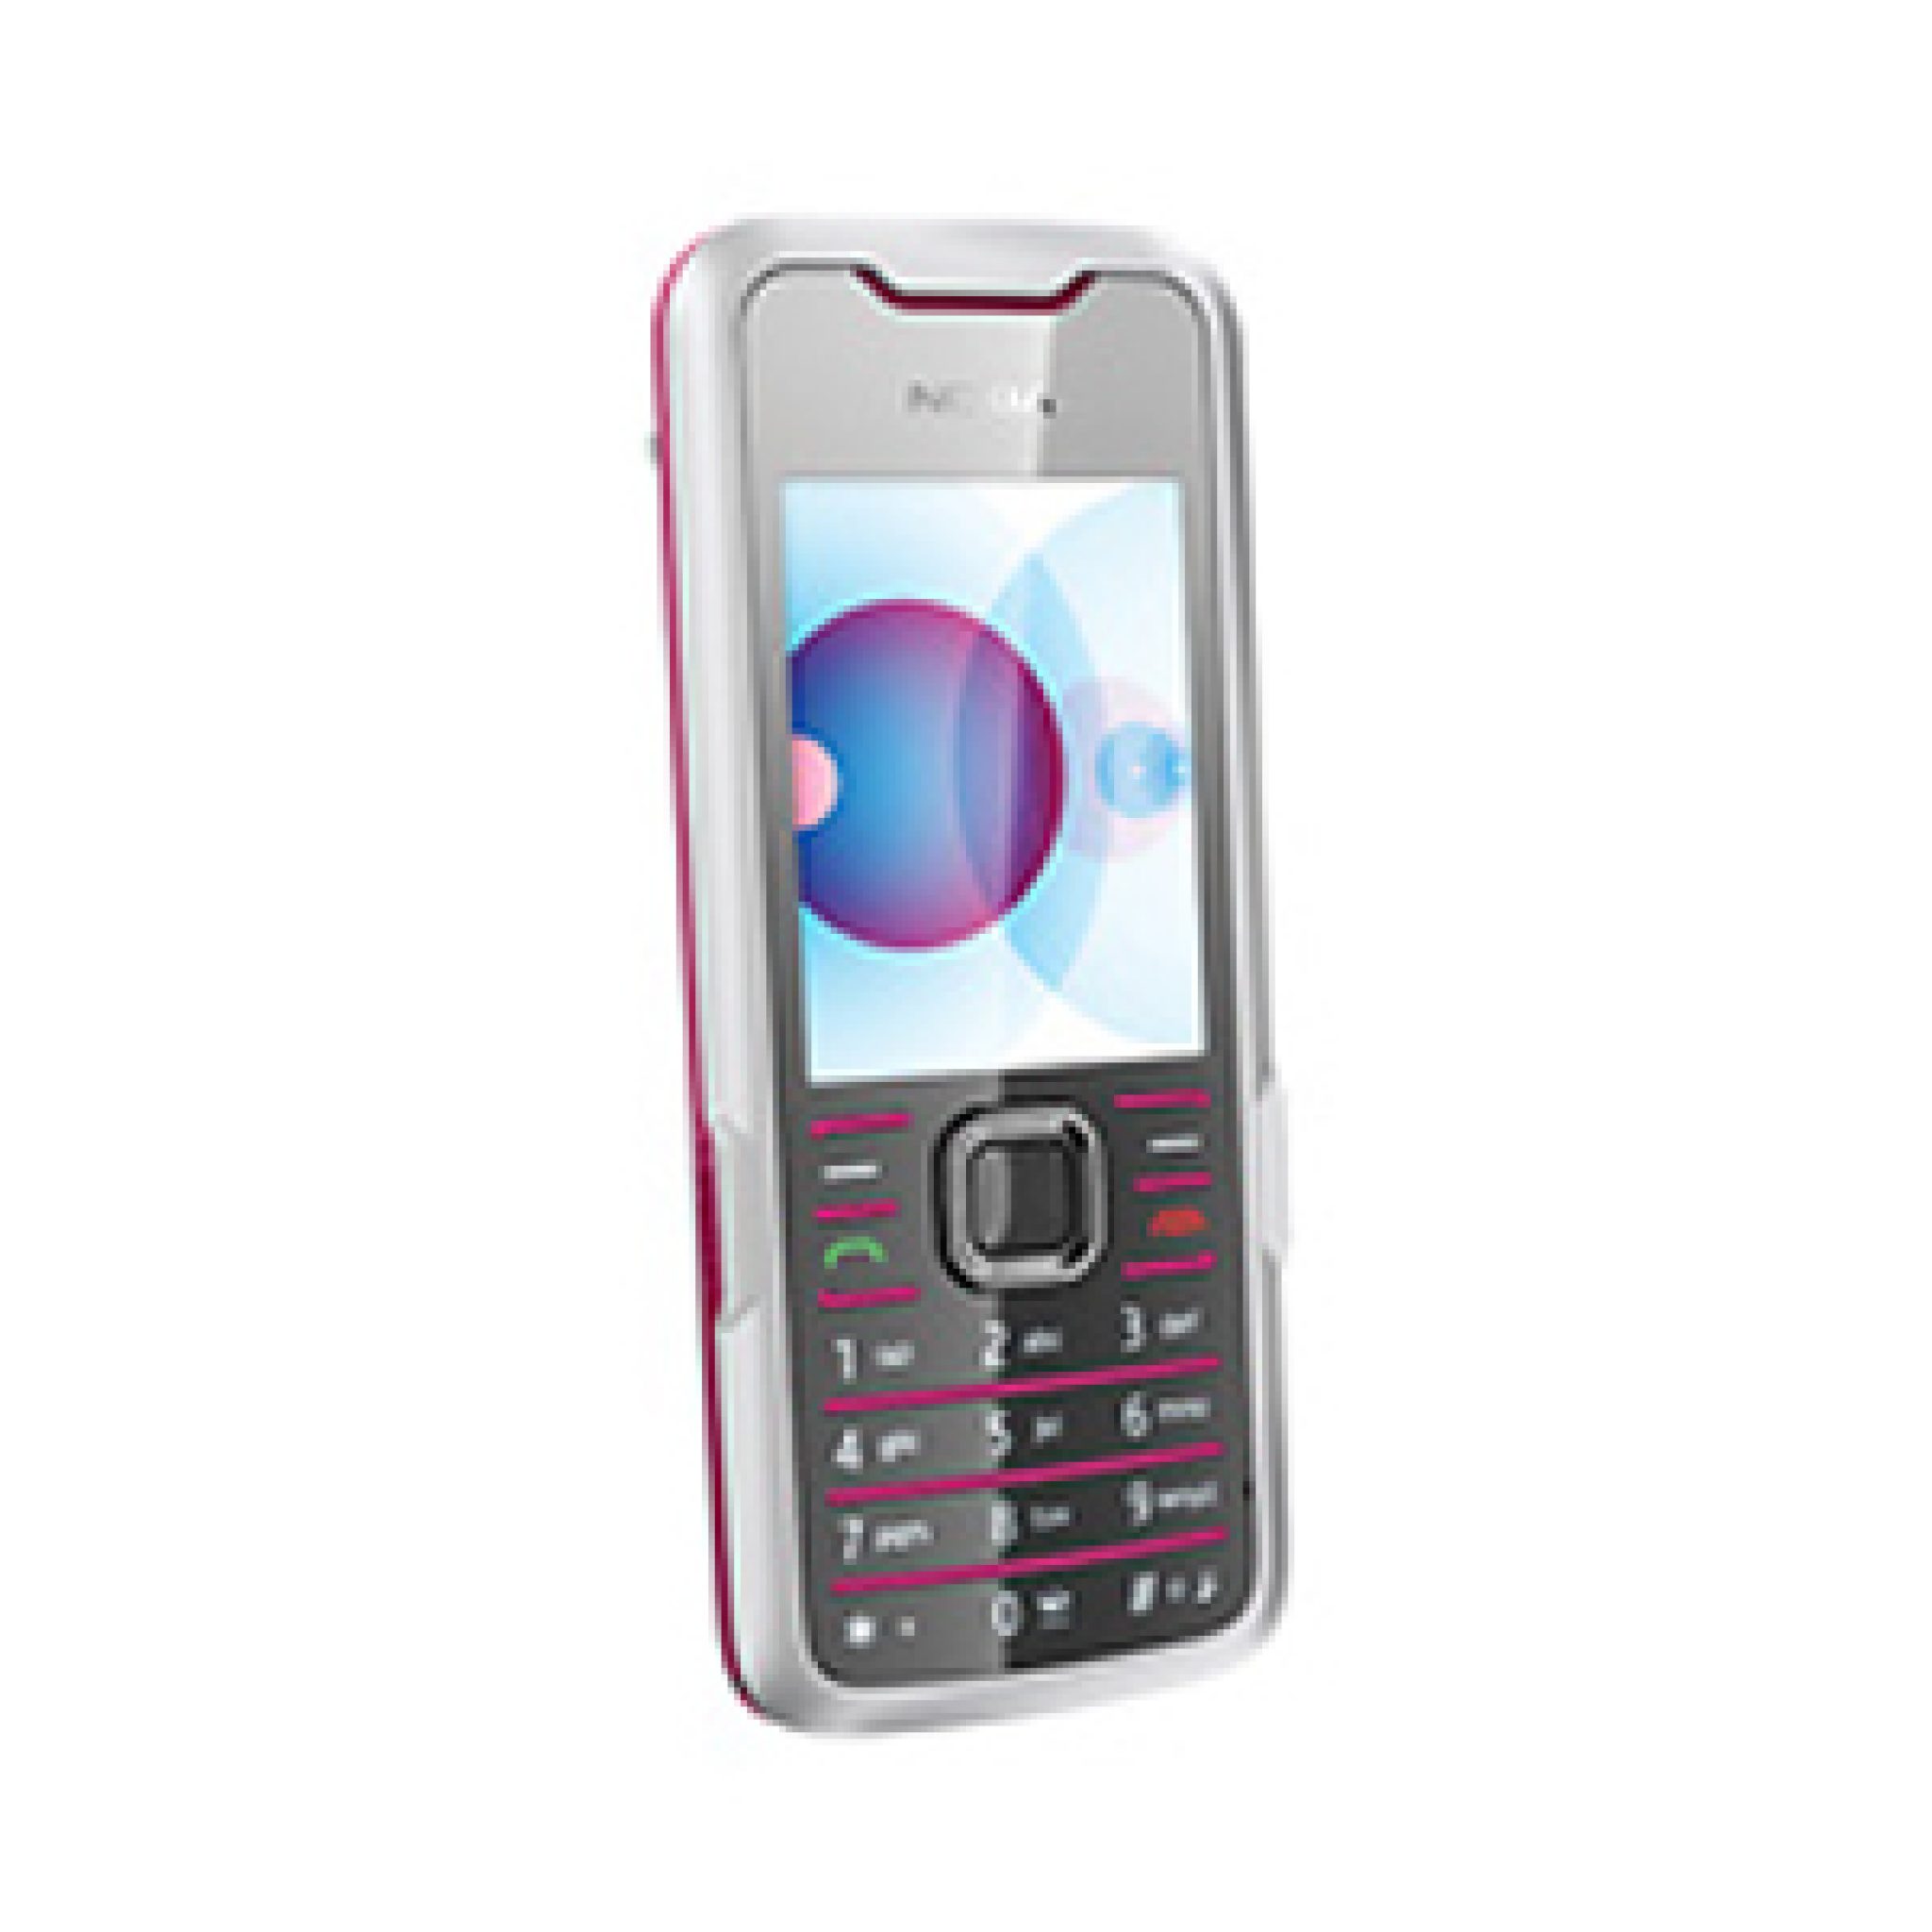 Nokia 7210 Supernova specs - PhoneArena